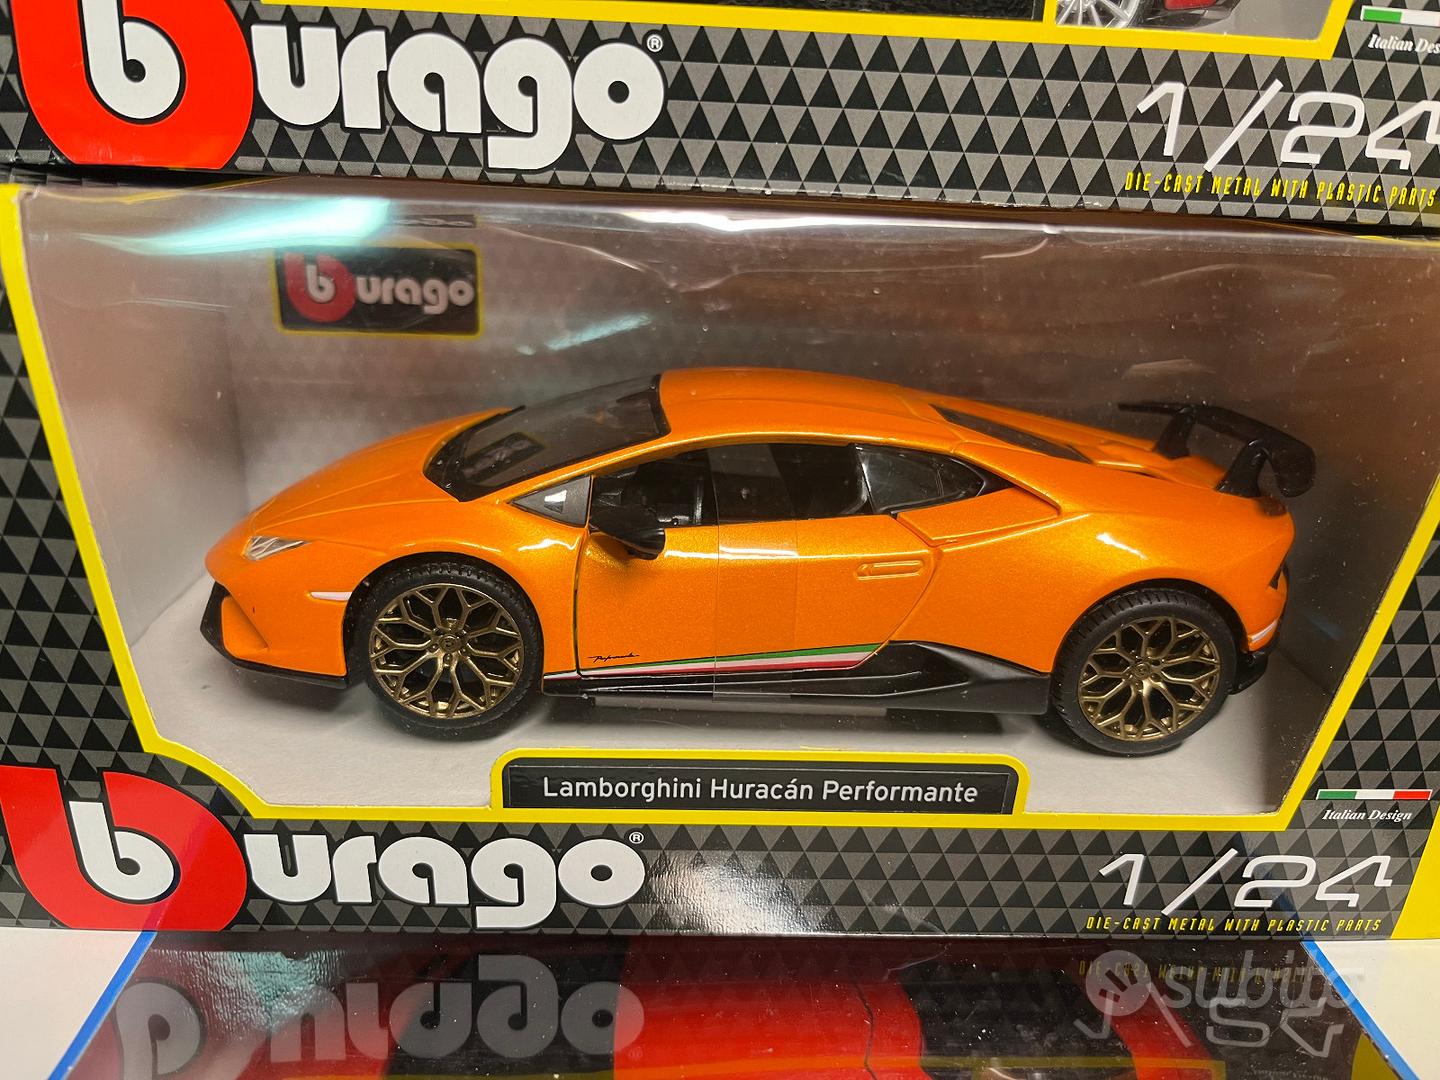 Burago 1:24 Scale Diecast Model Car - Lamborghini Huracan Performante